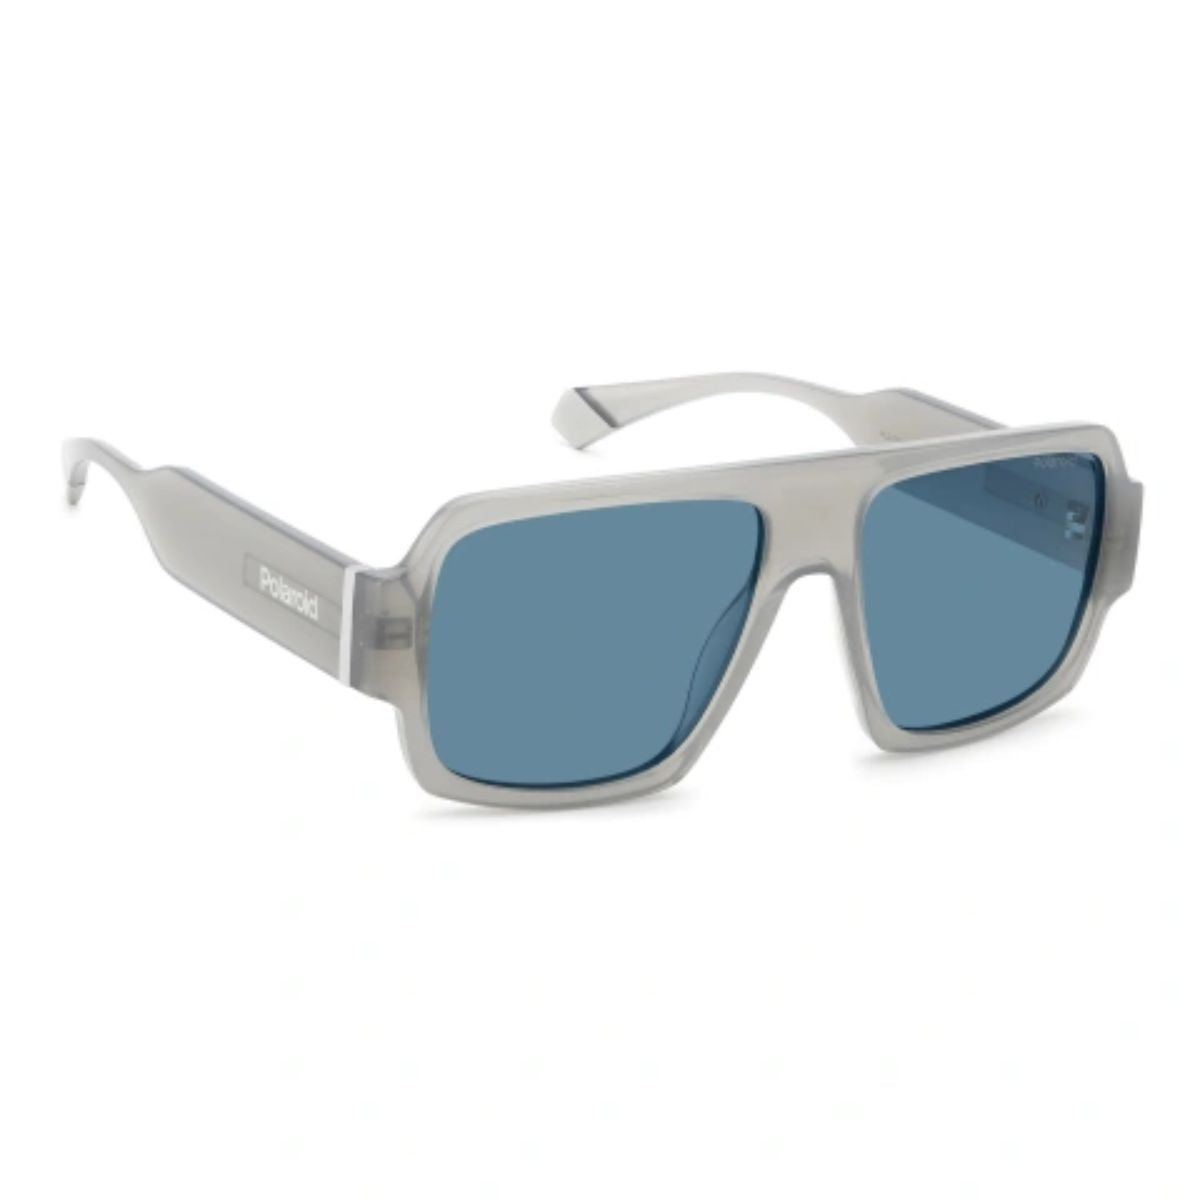 "Shop Budget Stylish Polarized Square Sunglasses At Optorium" 